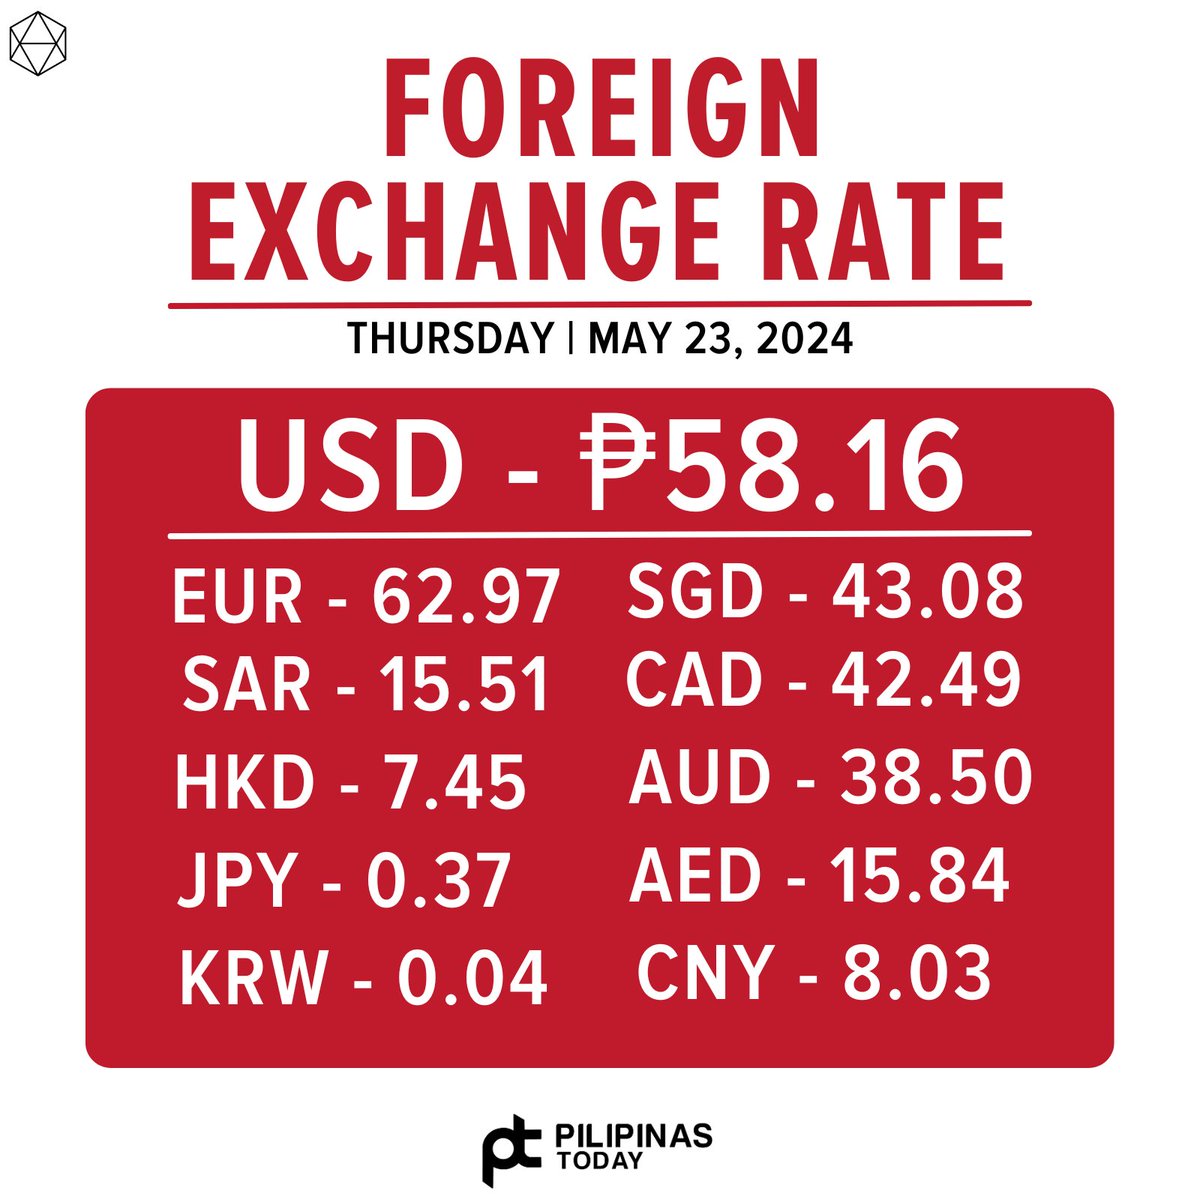 Ito ang Foreign exchange rate ngayong Huwebes, Mayo 23, 2024.

Source: Bangko Sentral ng Pilipinas/website

#PilipinasToday
#ForeignExchange